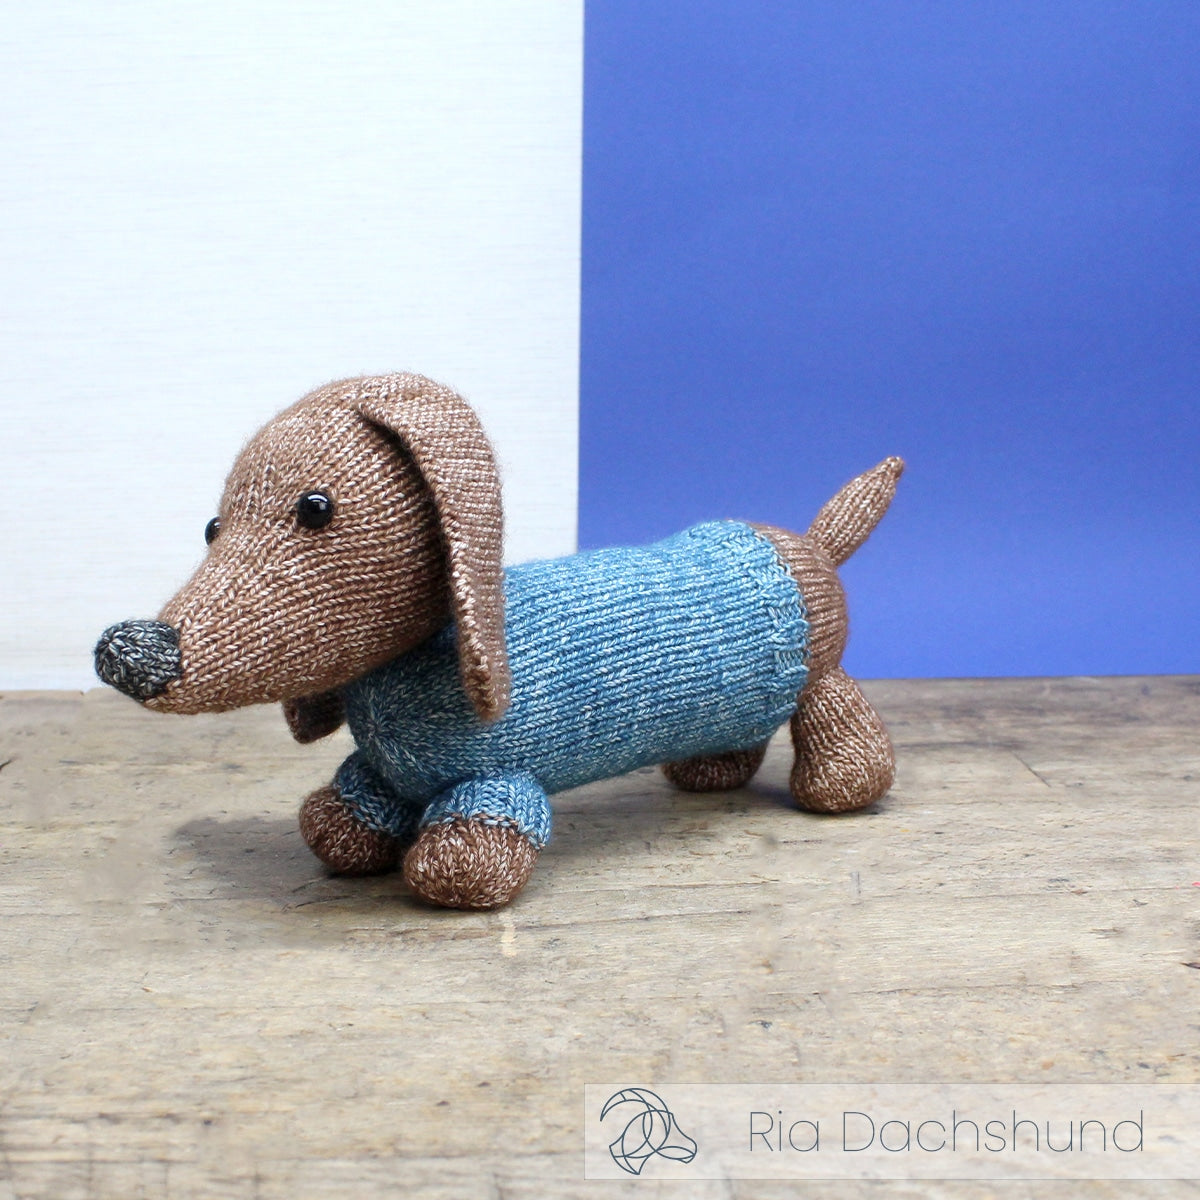 Ria the Dachshund -  Doggy Knitting Kit from Hardicraft